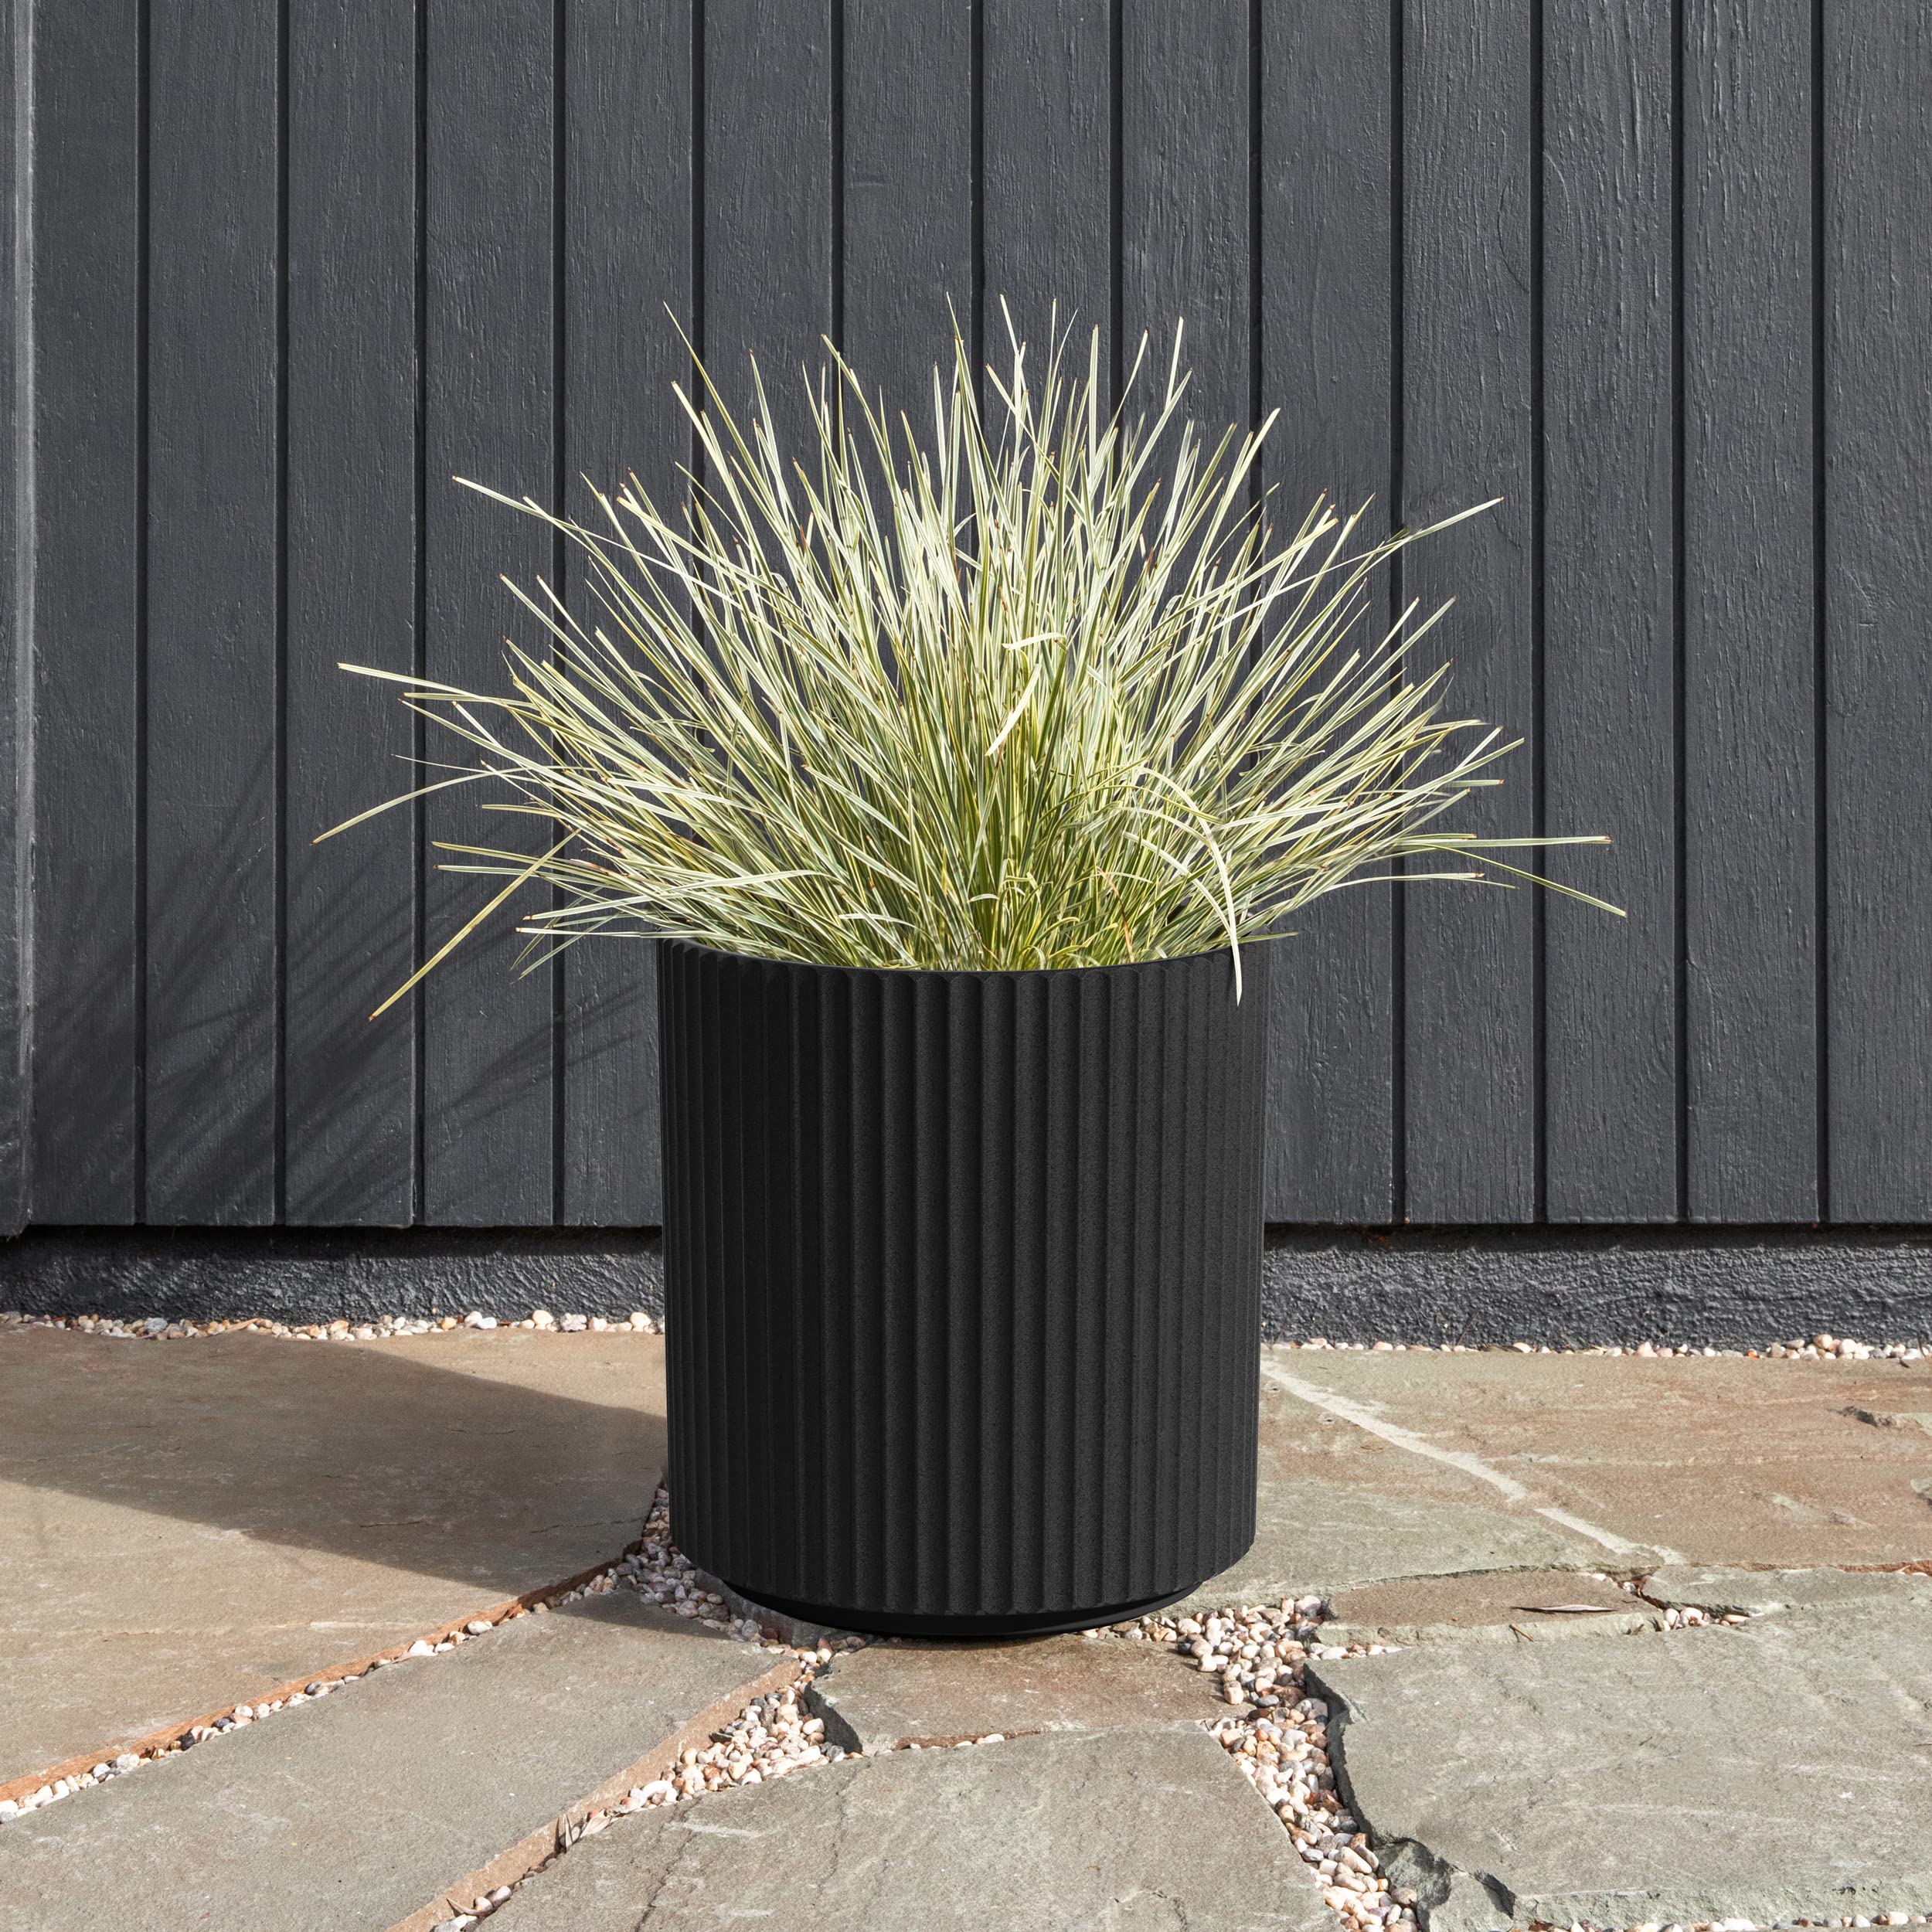 Veradek Demi Series Round Planter for Porch, Patio, Backyard | Durable Plastic-Concrete Material | Modern Décor for Tall Plants, Flowers